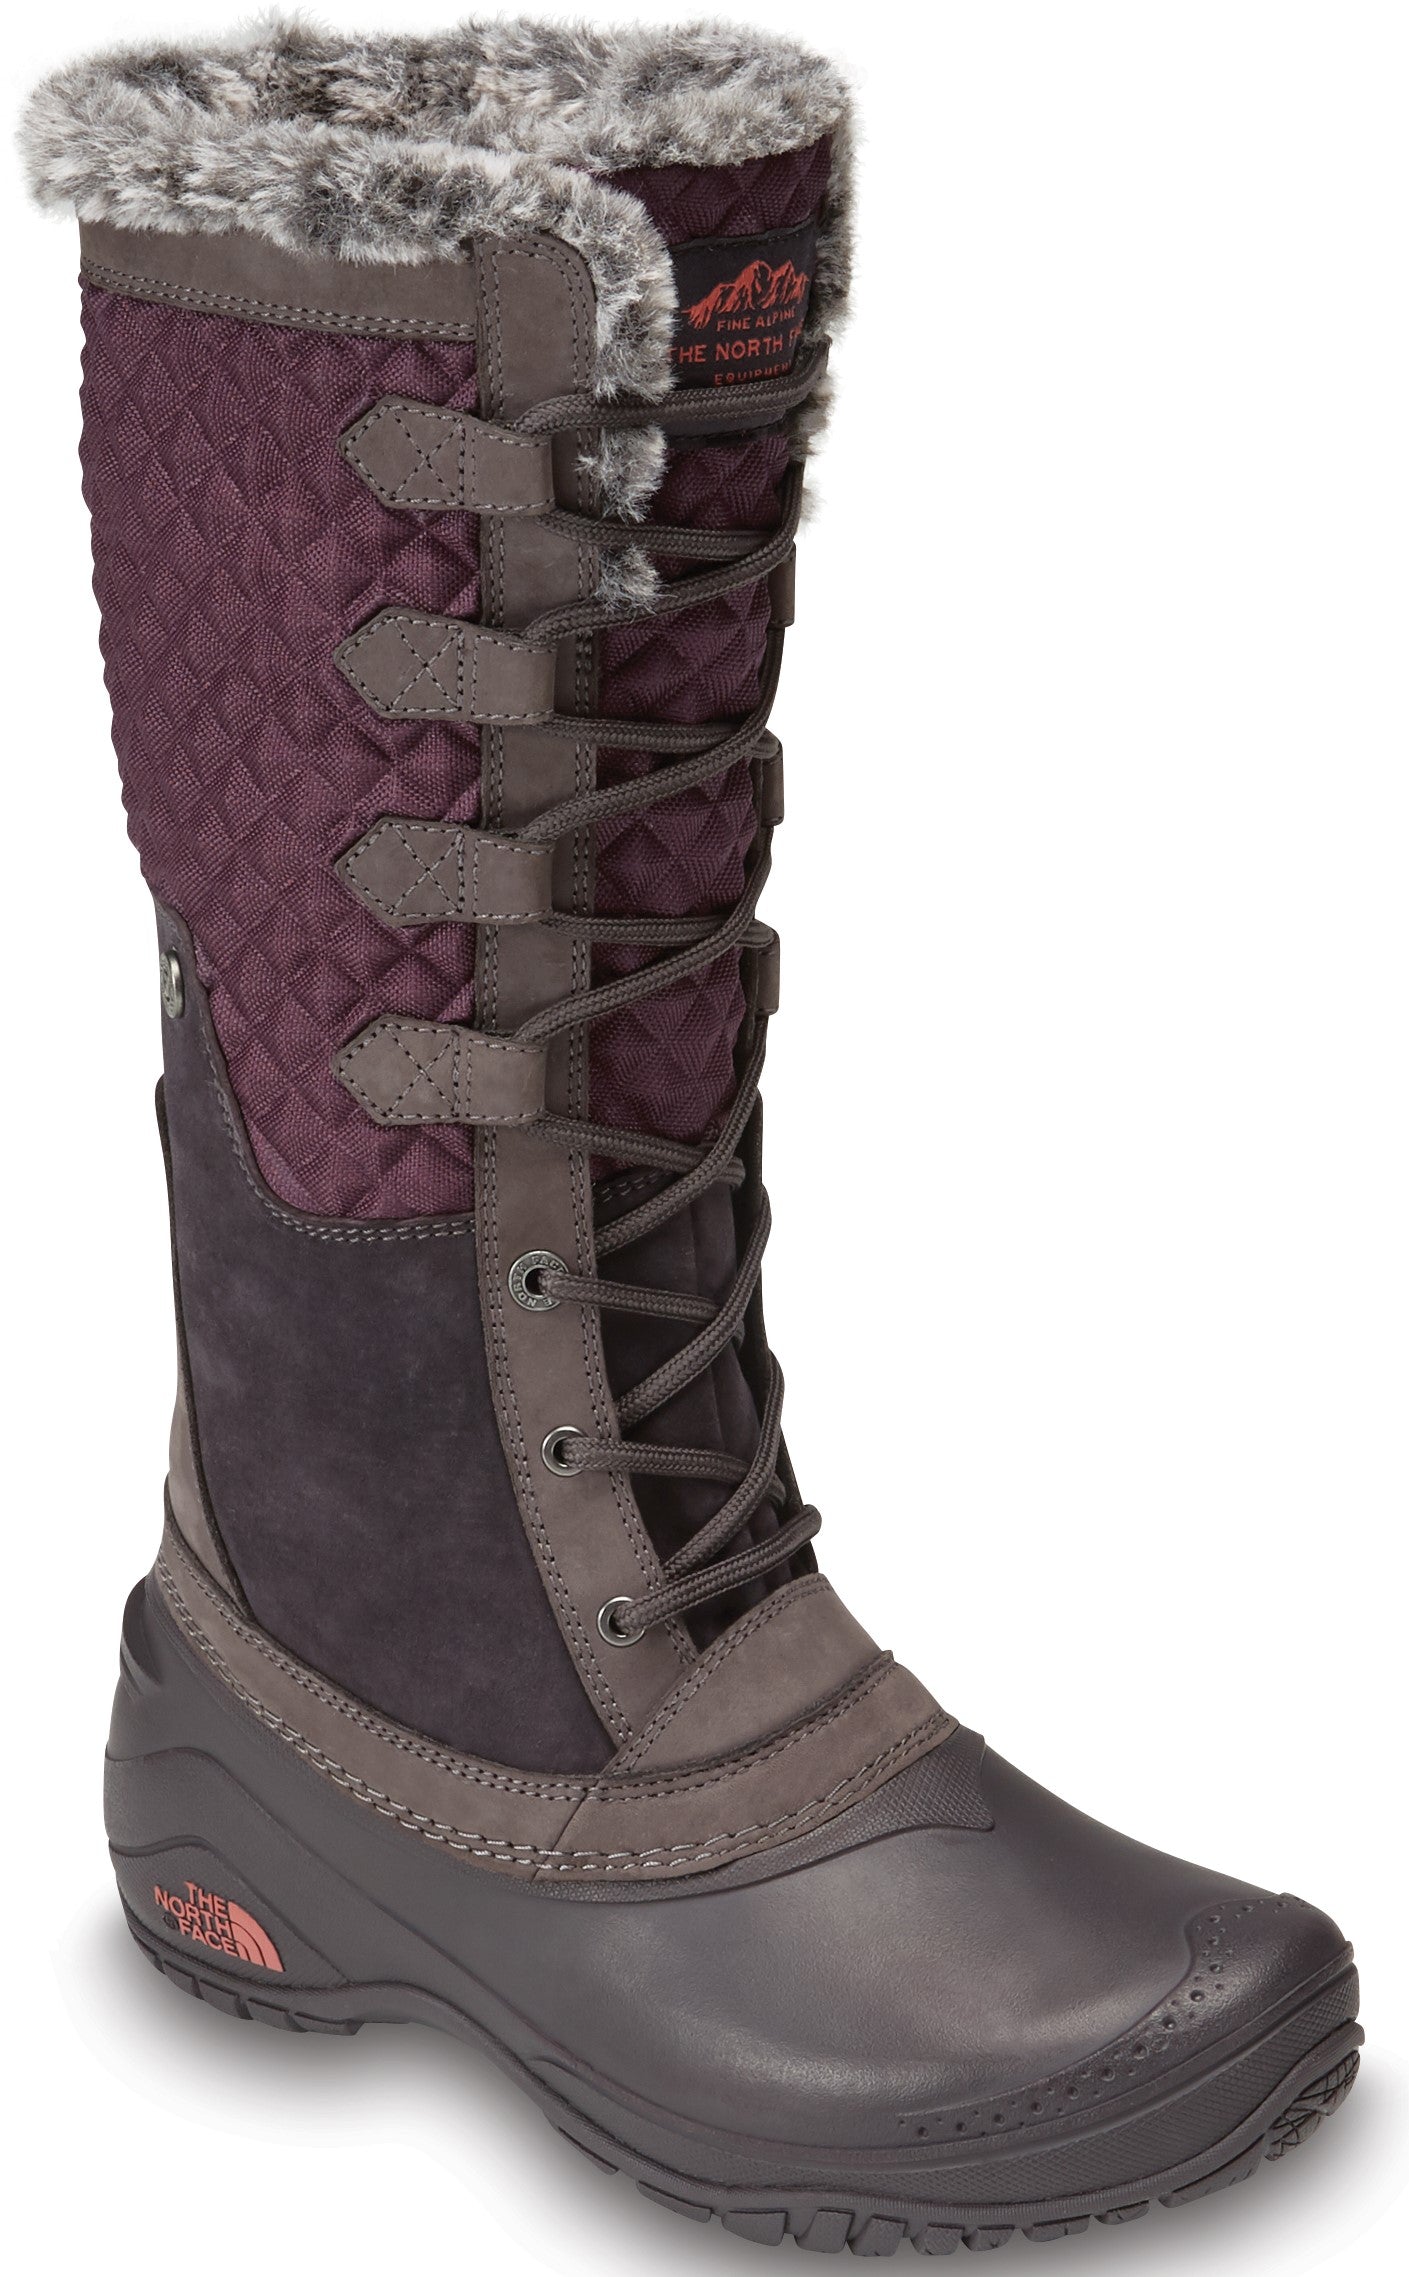 The North Face Shellista III Tall Winter Boots - Women's | The Last Hunt